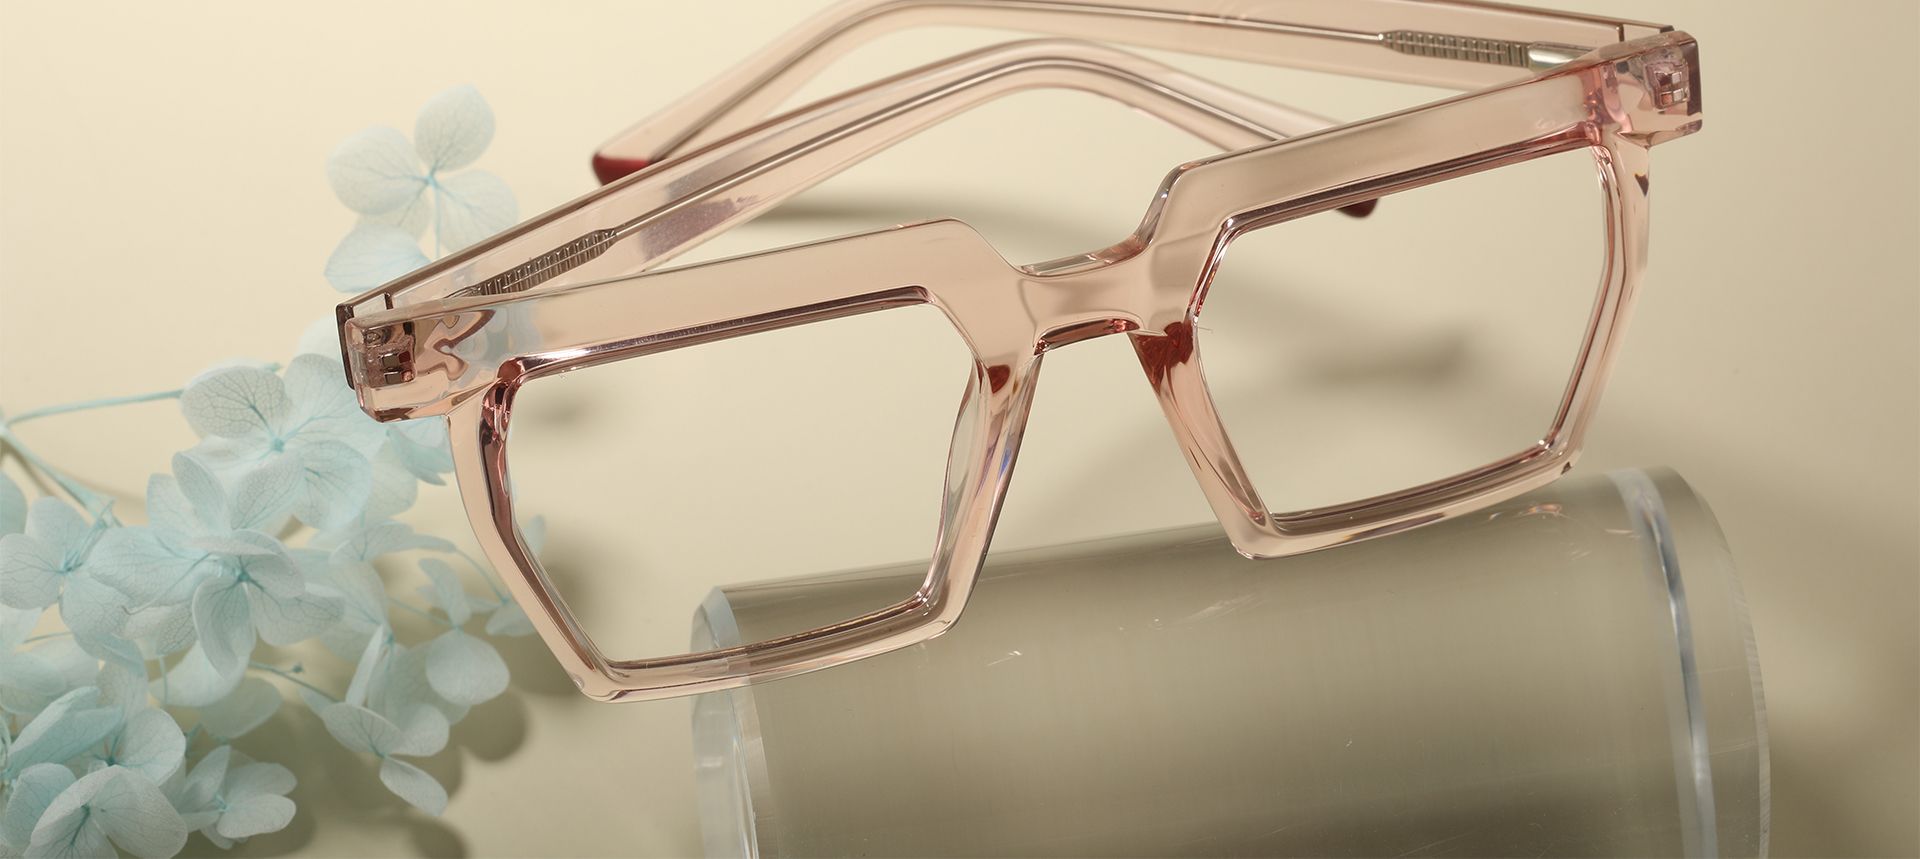 Yassine Geometric Blue Light Blocking Glasses - Clear, Women's Eyeglasses